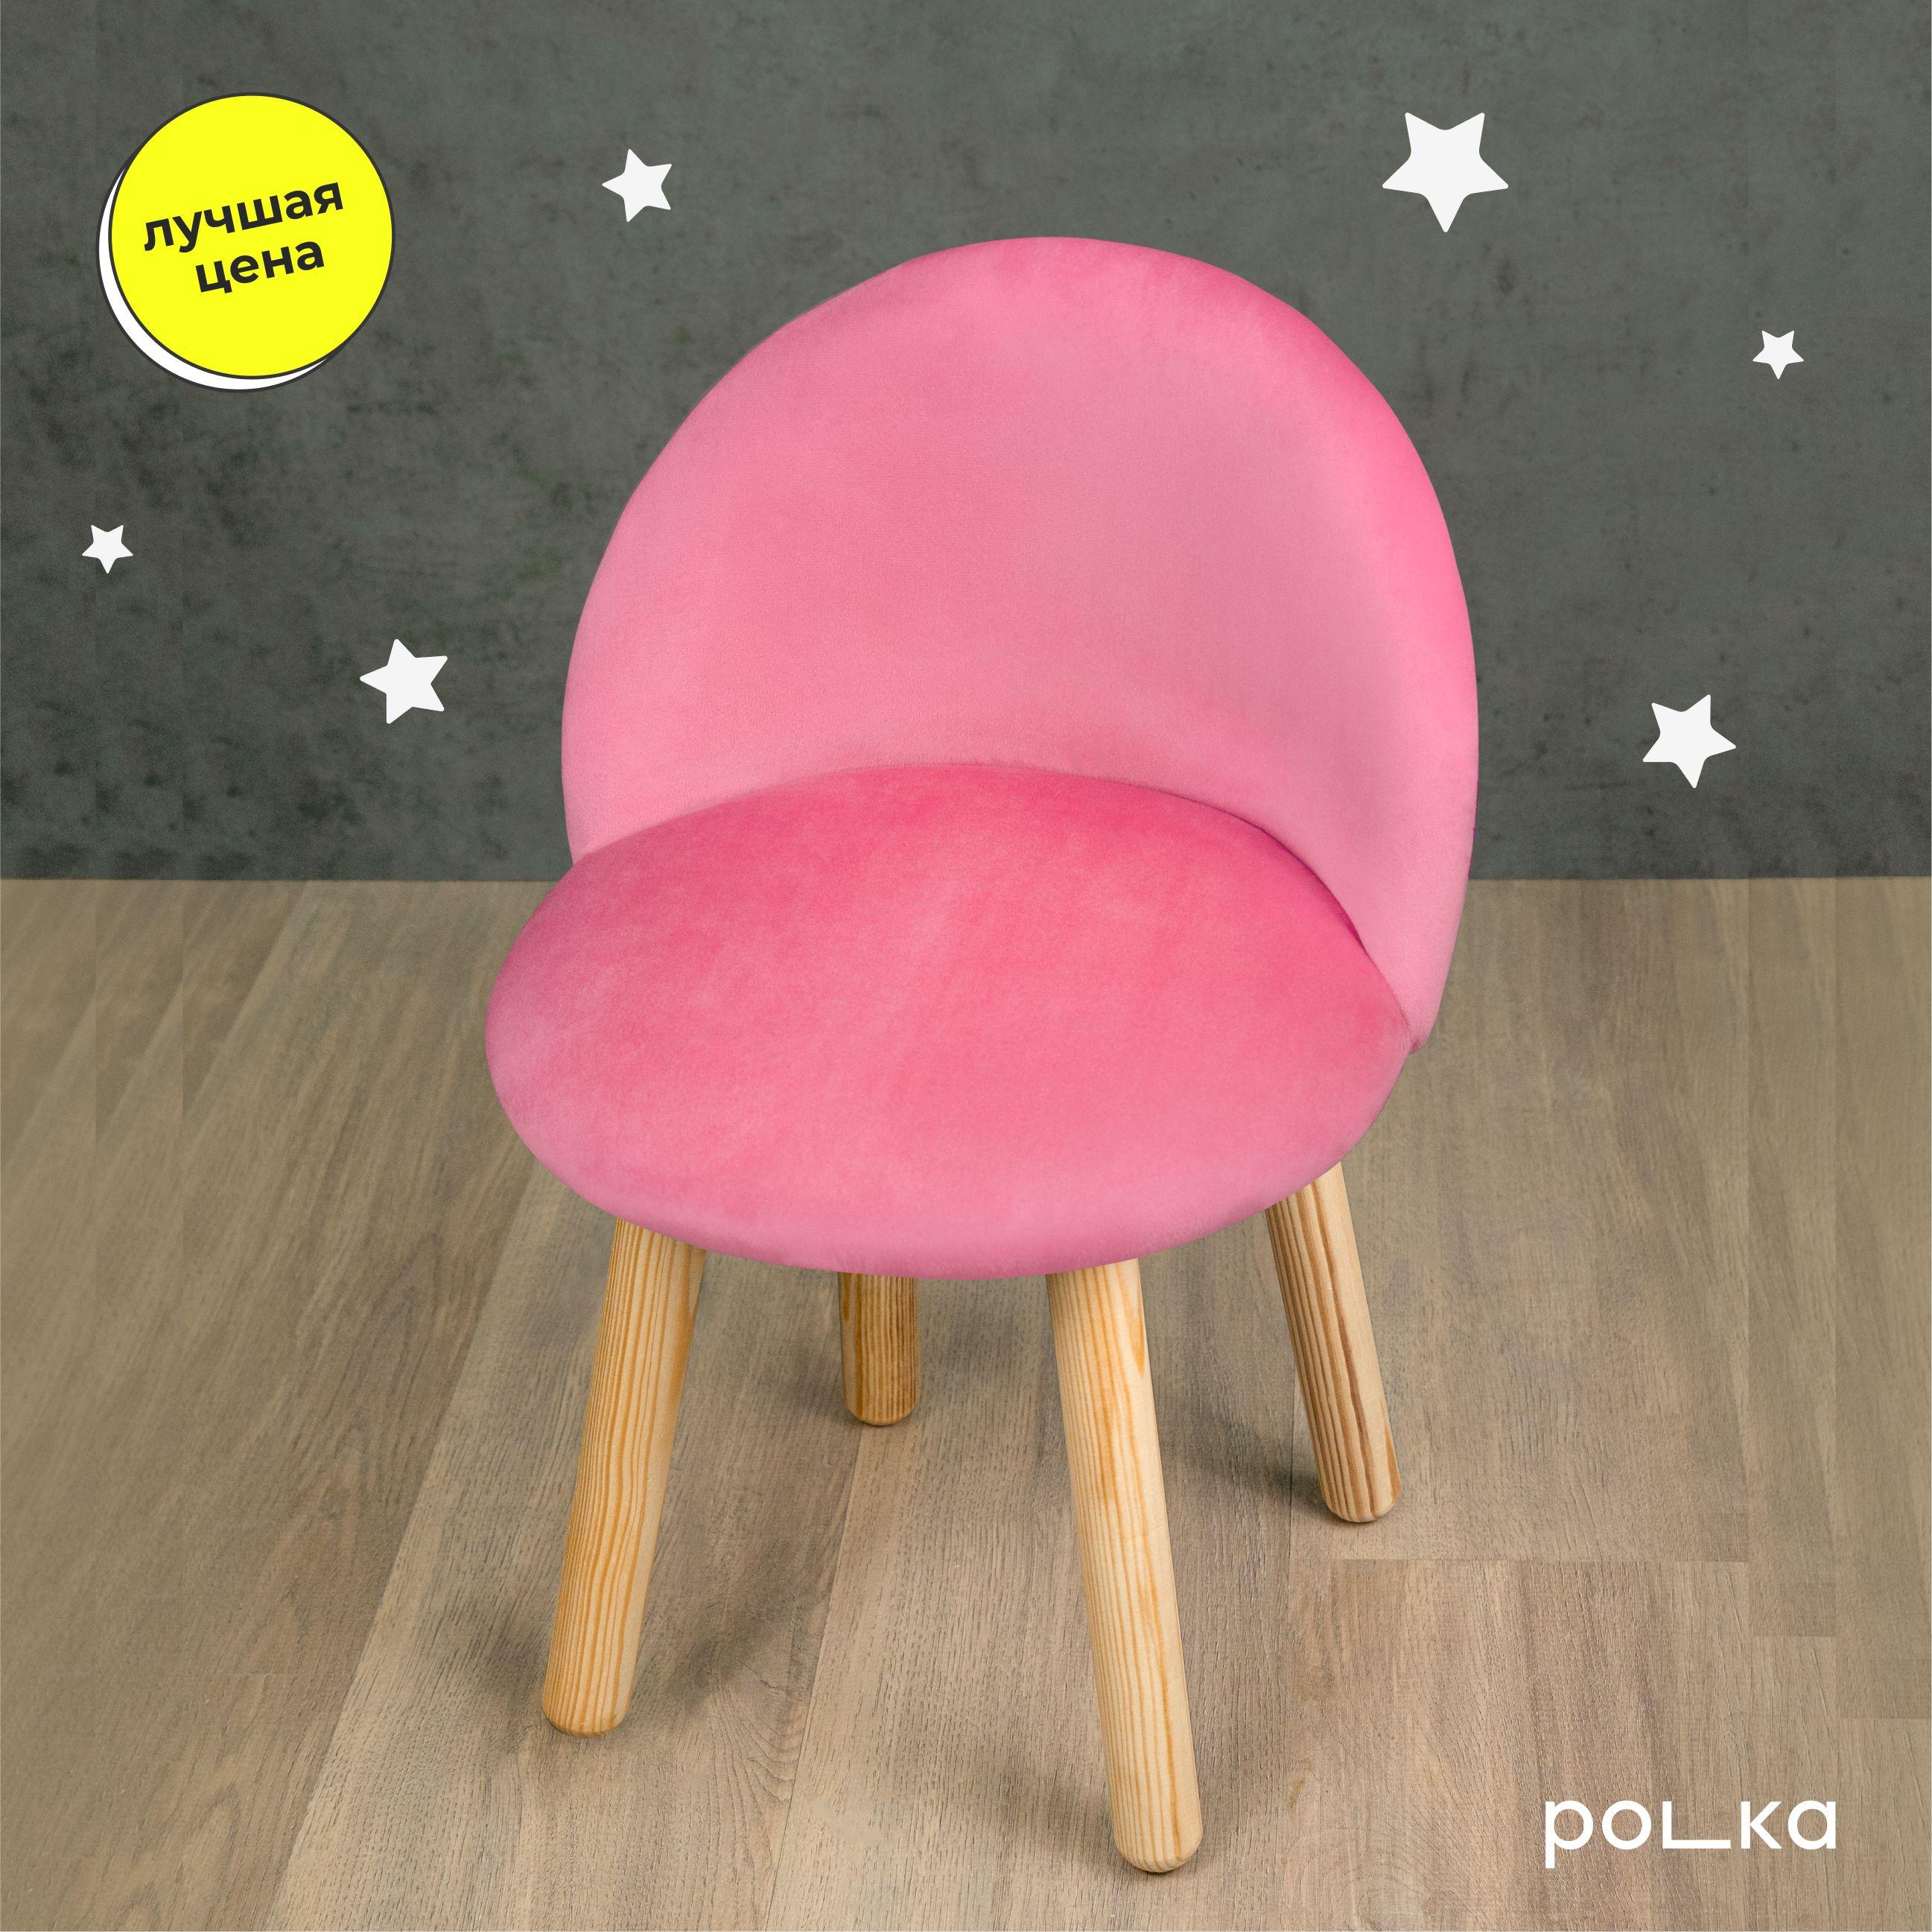 Polka Мебель | Polka Мебель Детский стул,36х34х55см